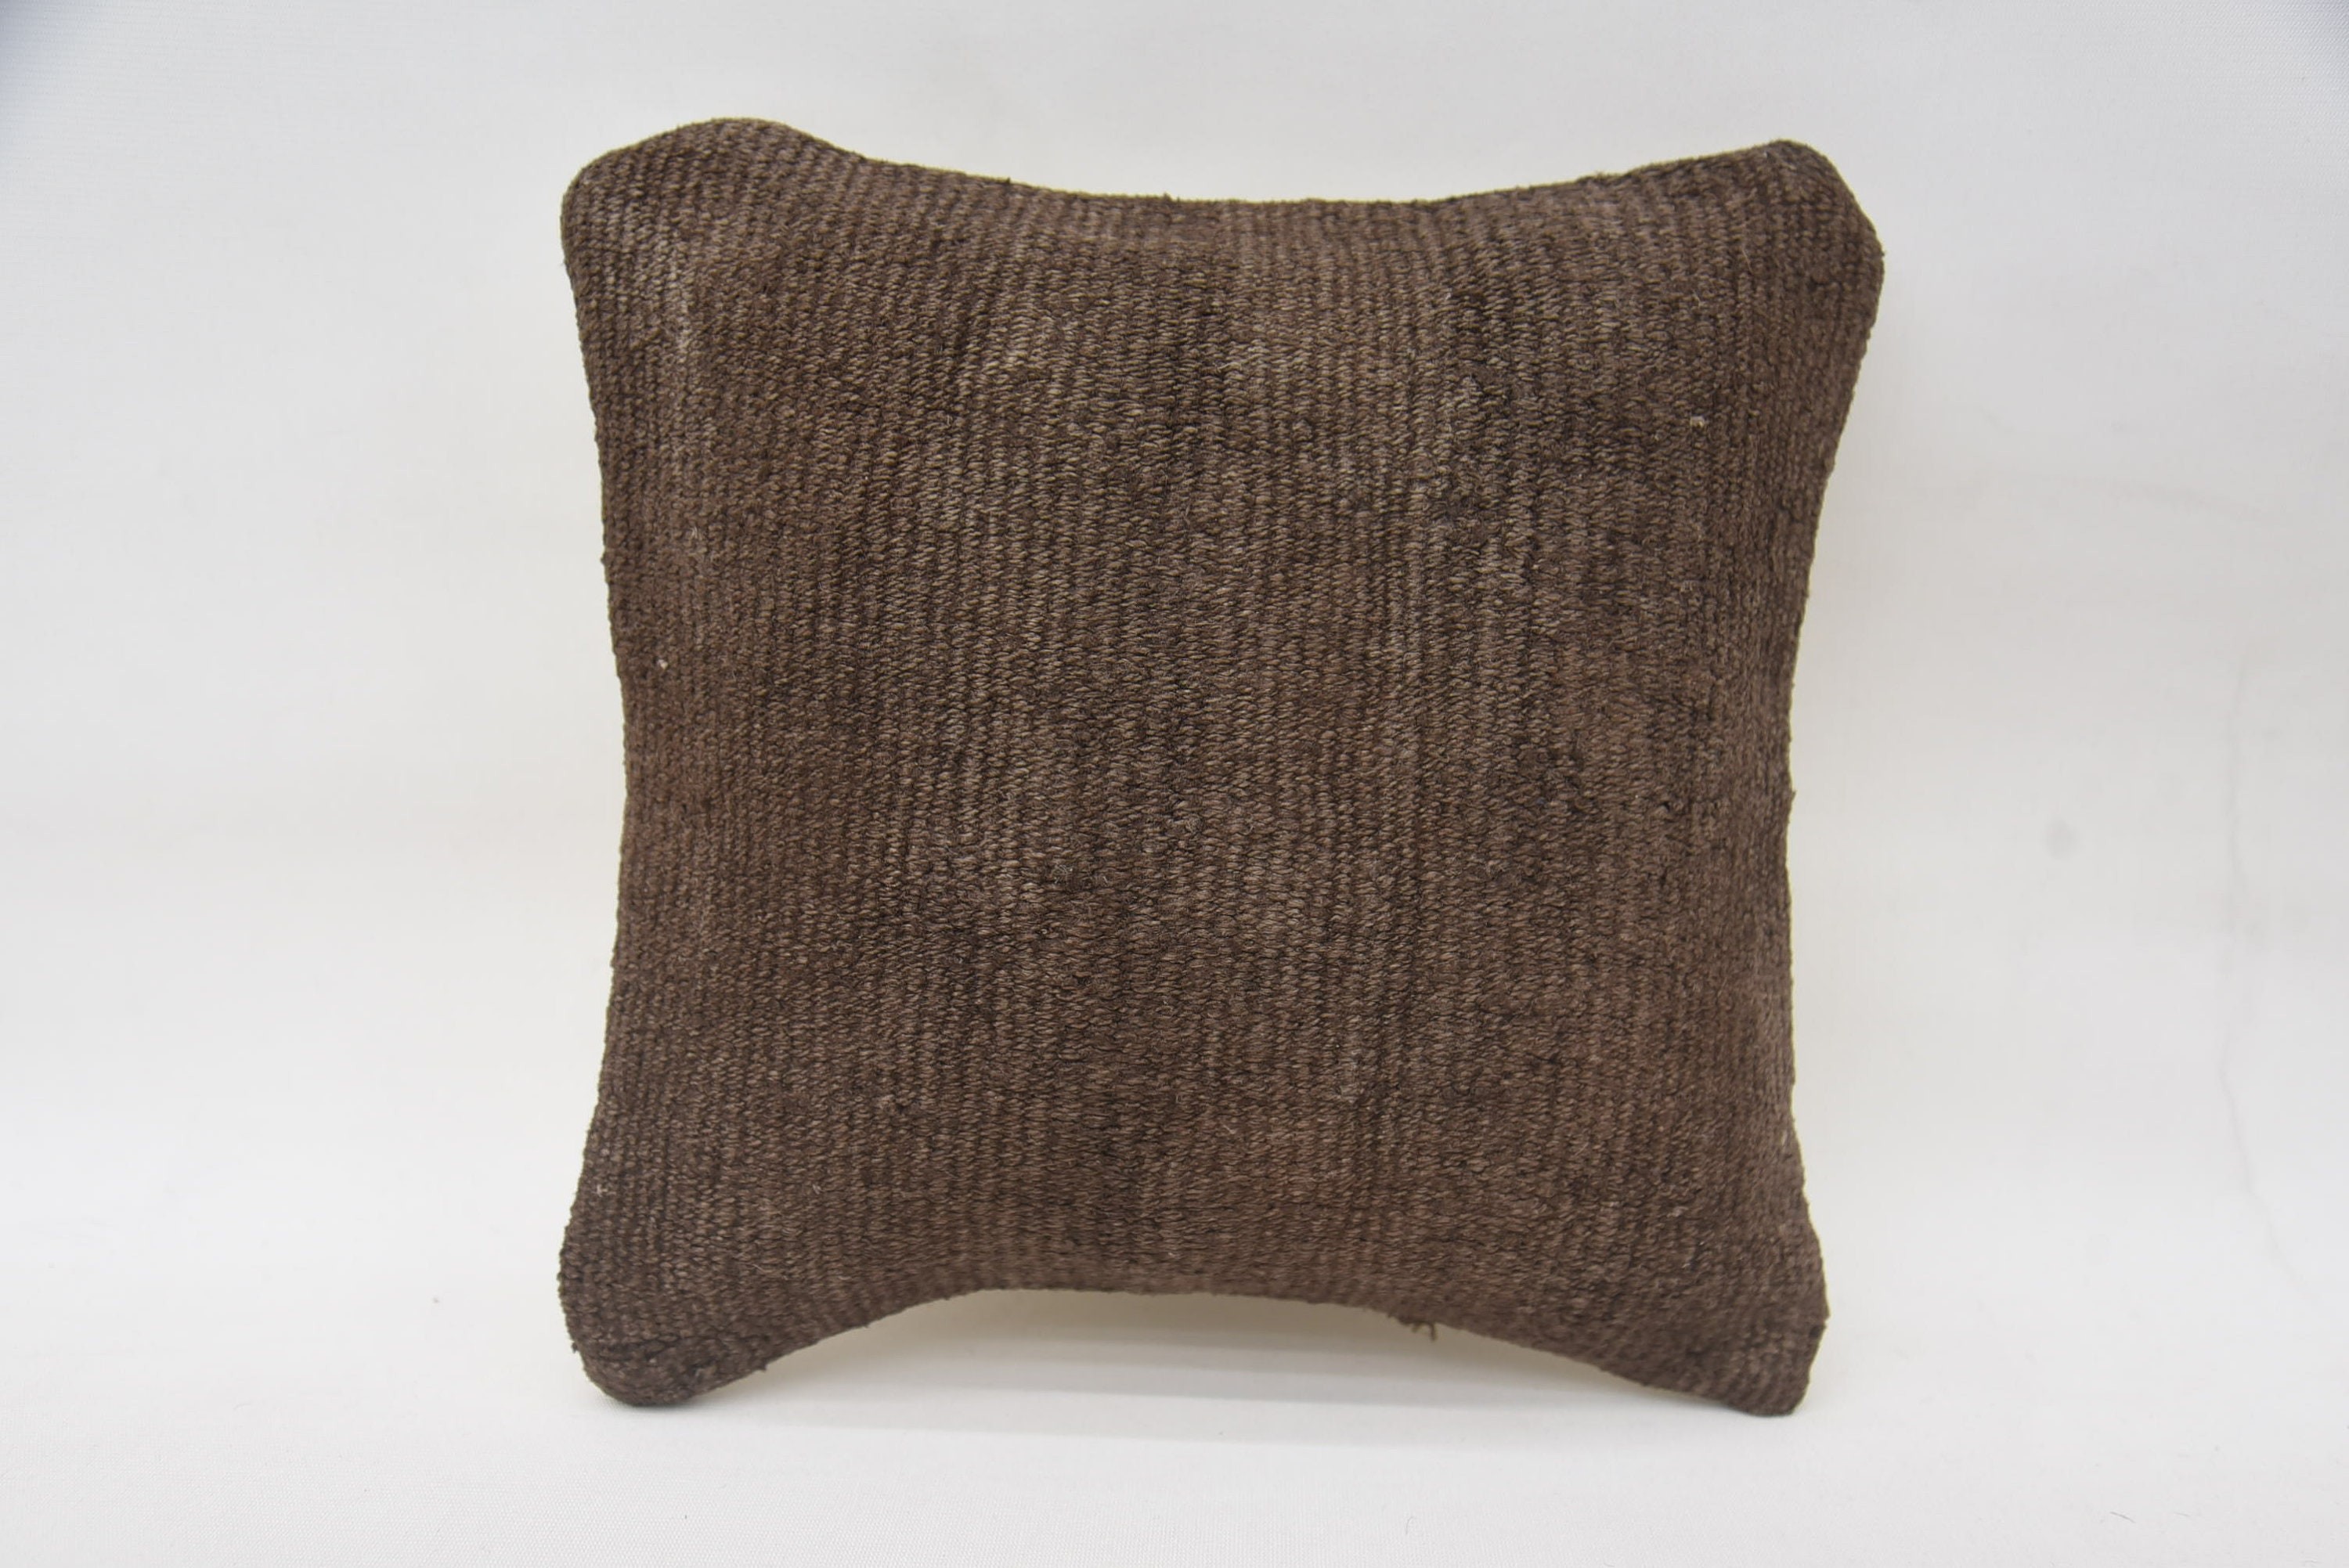 Pillow for Sofa, Handmade Kilim Cushion, Cotton Pillow Cover, Tapestry Cushion Cover, 12"x12" Brown Cushion Case, Vintage Pillow